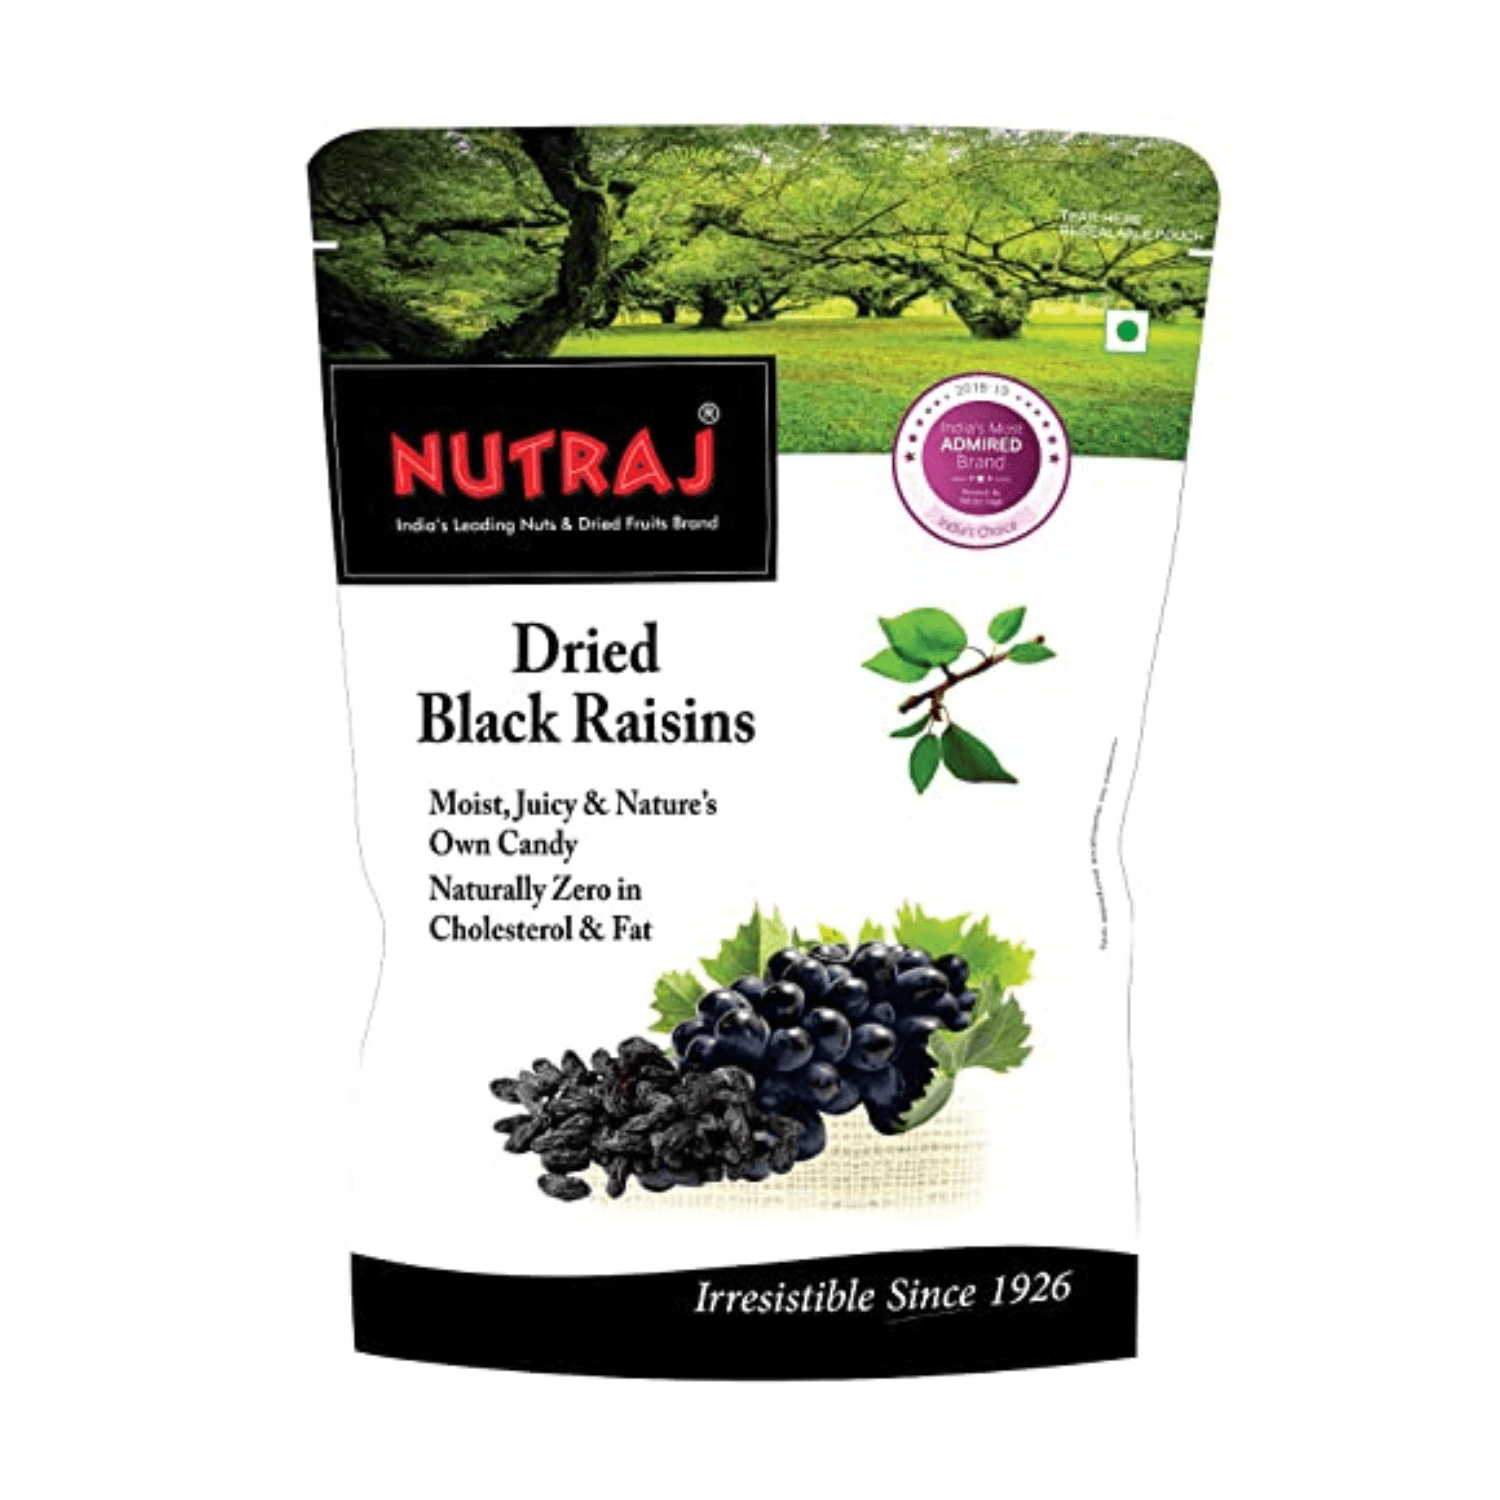 Nutraj Black Raisins